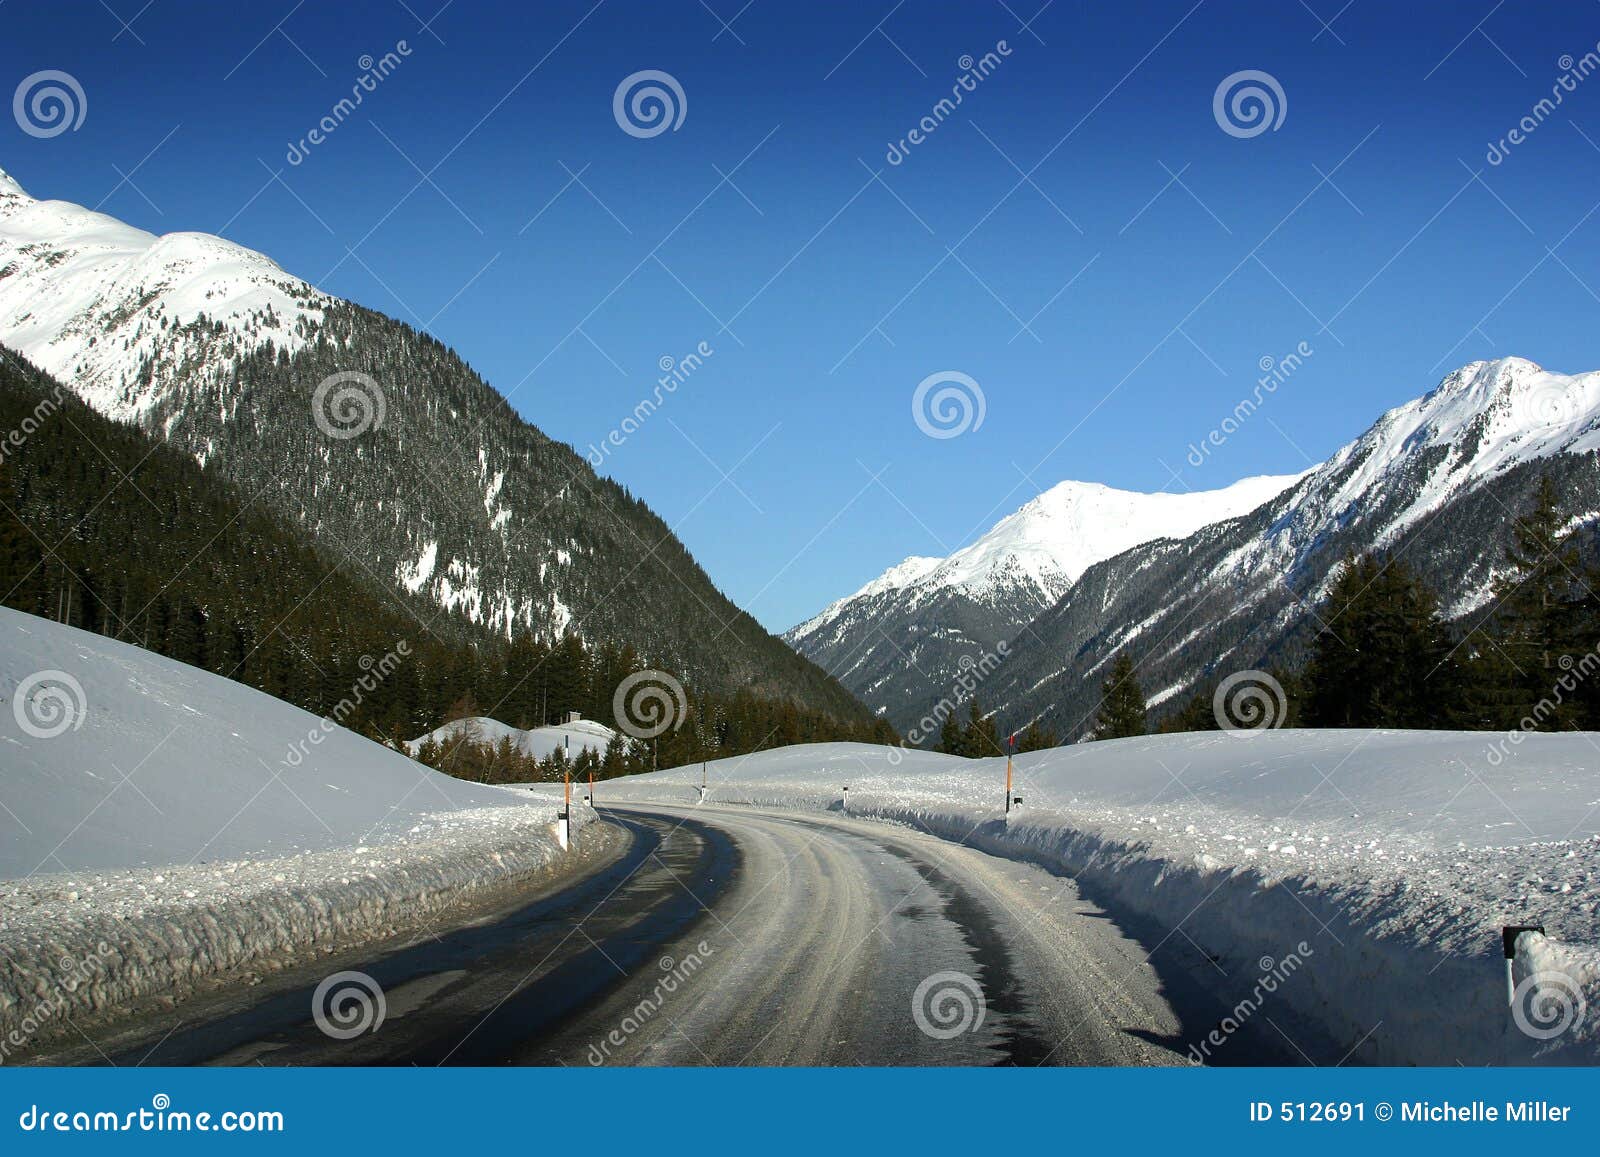 ischgl austria road to st anton